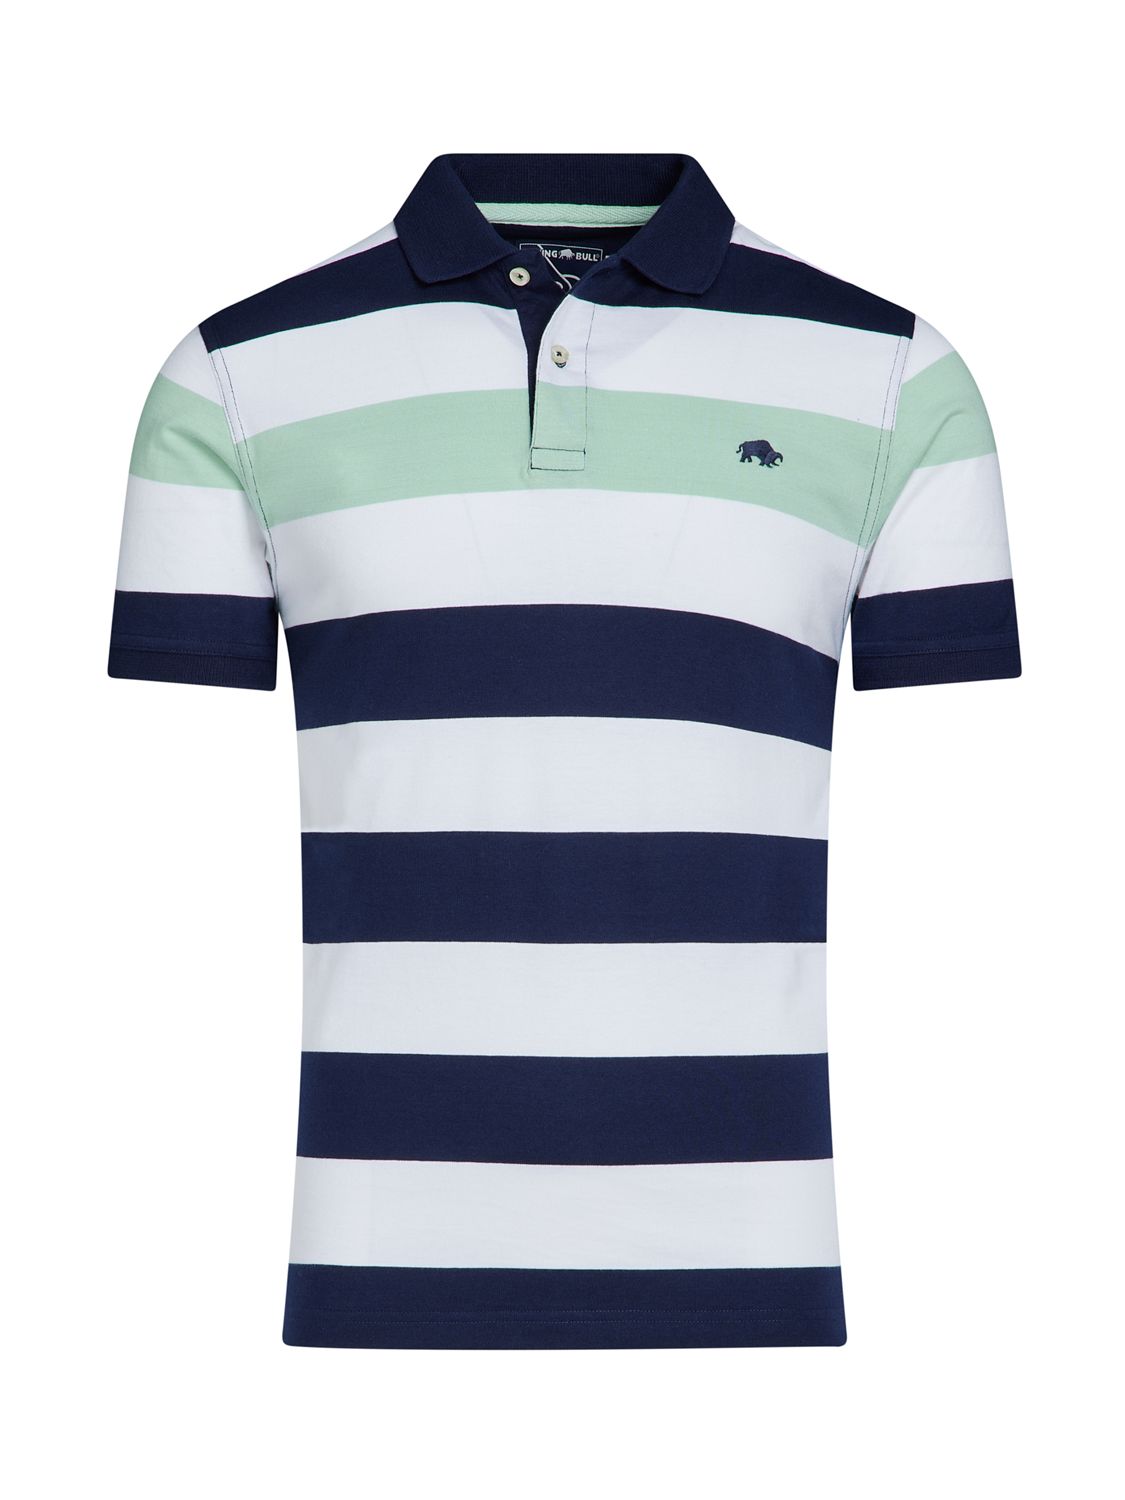 Raging Bull Irregular Stripe Jersey Polo Shirt, Apple Green/Multi, S